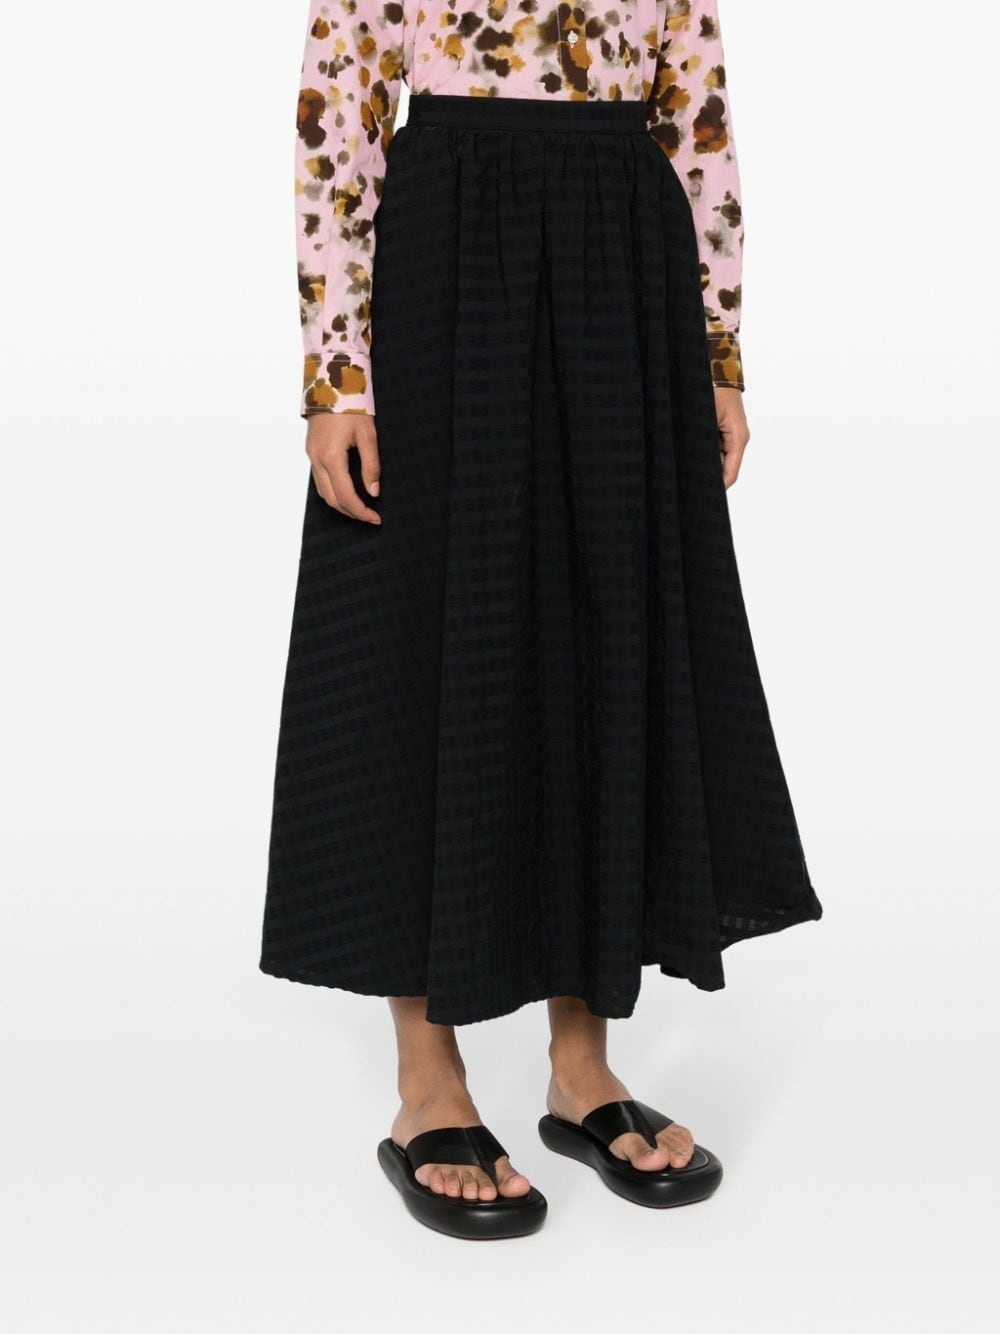 seersucker-embellished skirt - 3